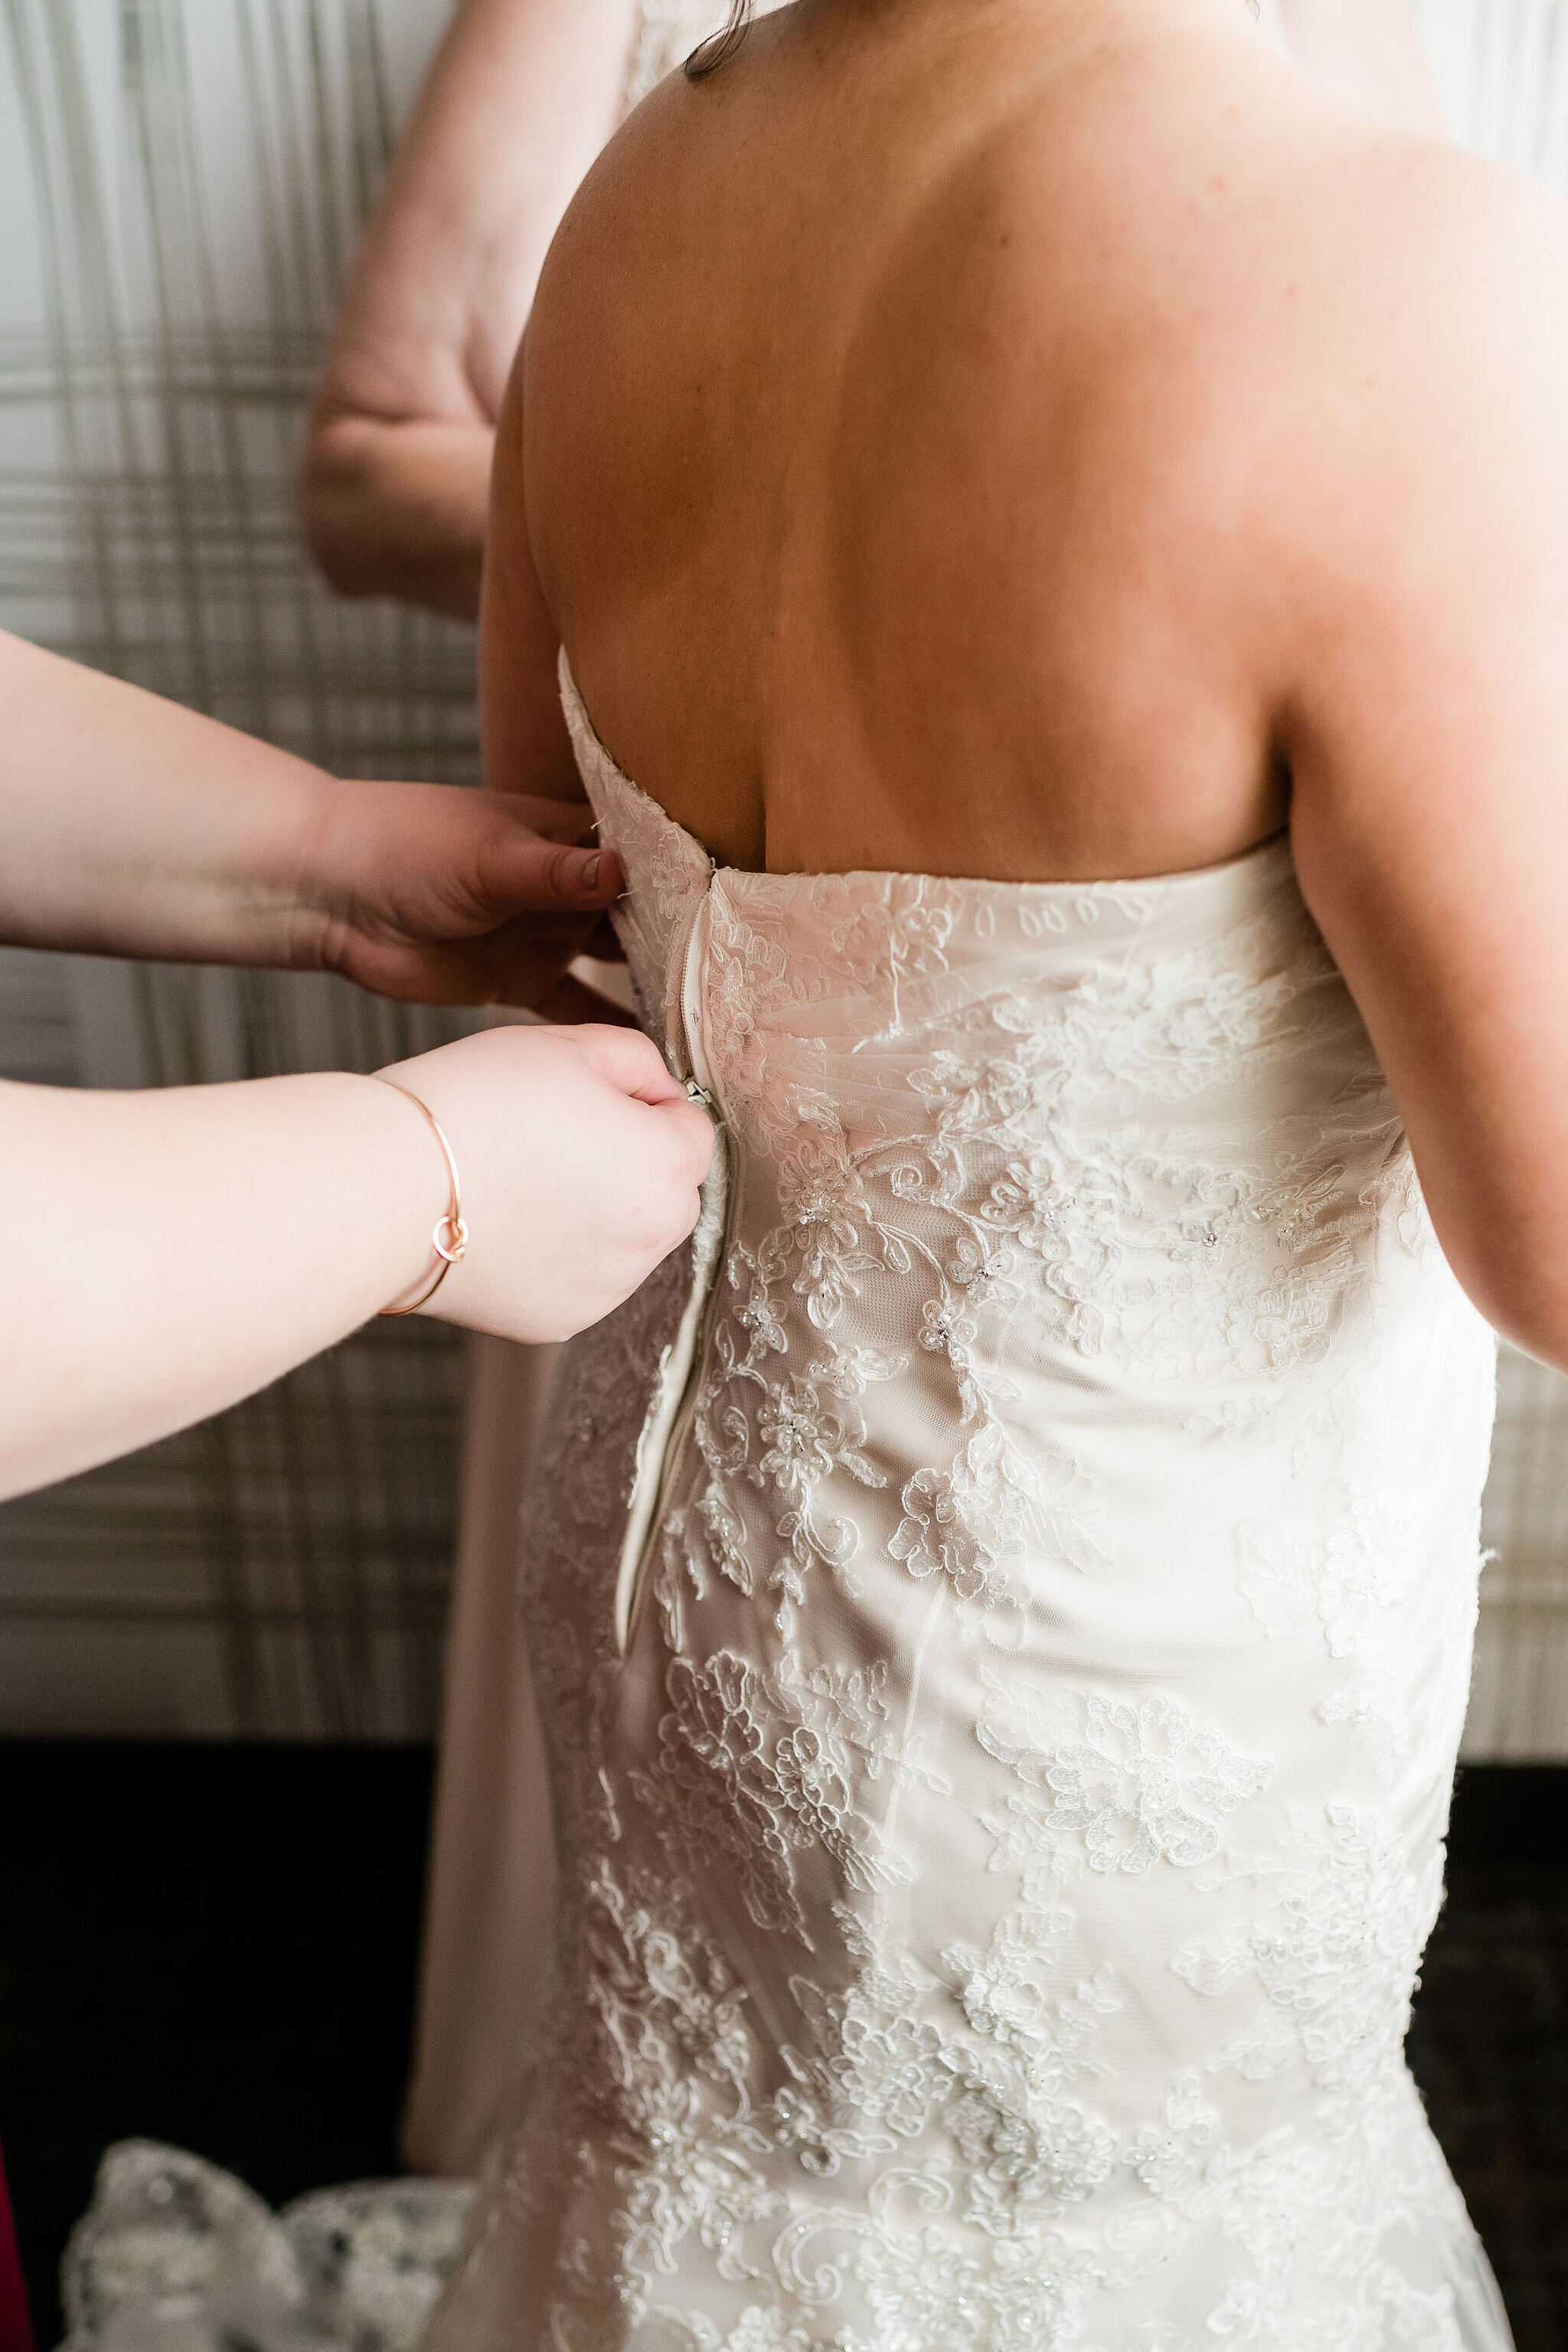 Bridesmaid zipping up bride's wedding dress